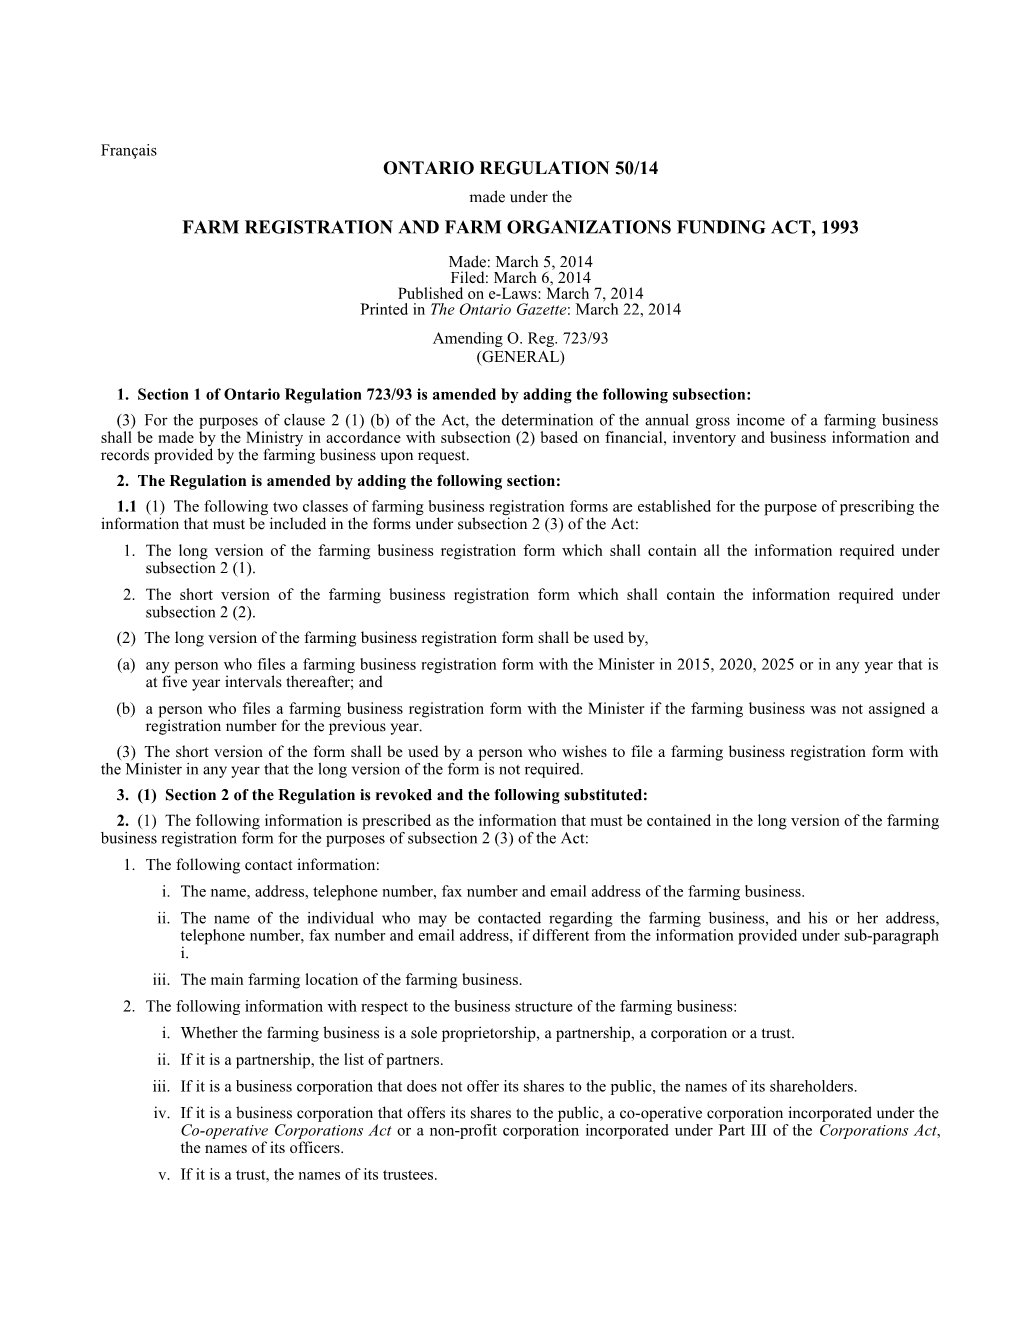 FARM REGISTRATION AND FARM ORGANIZATIONS FUNDING ACT, 1993 - O. Reg. 50/14